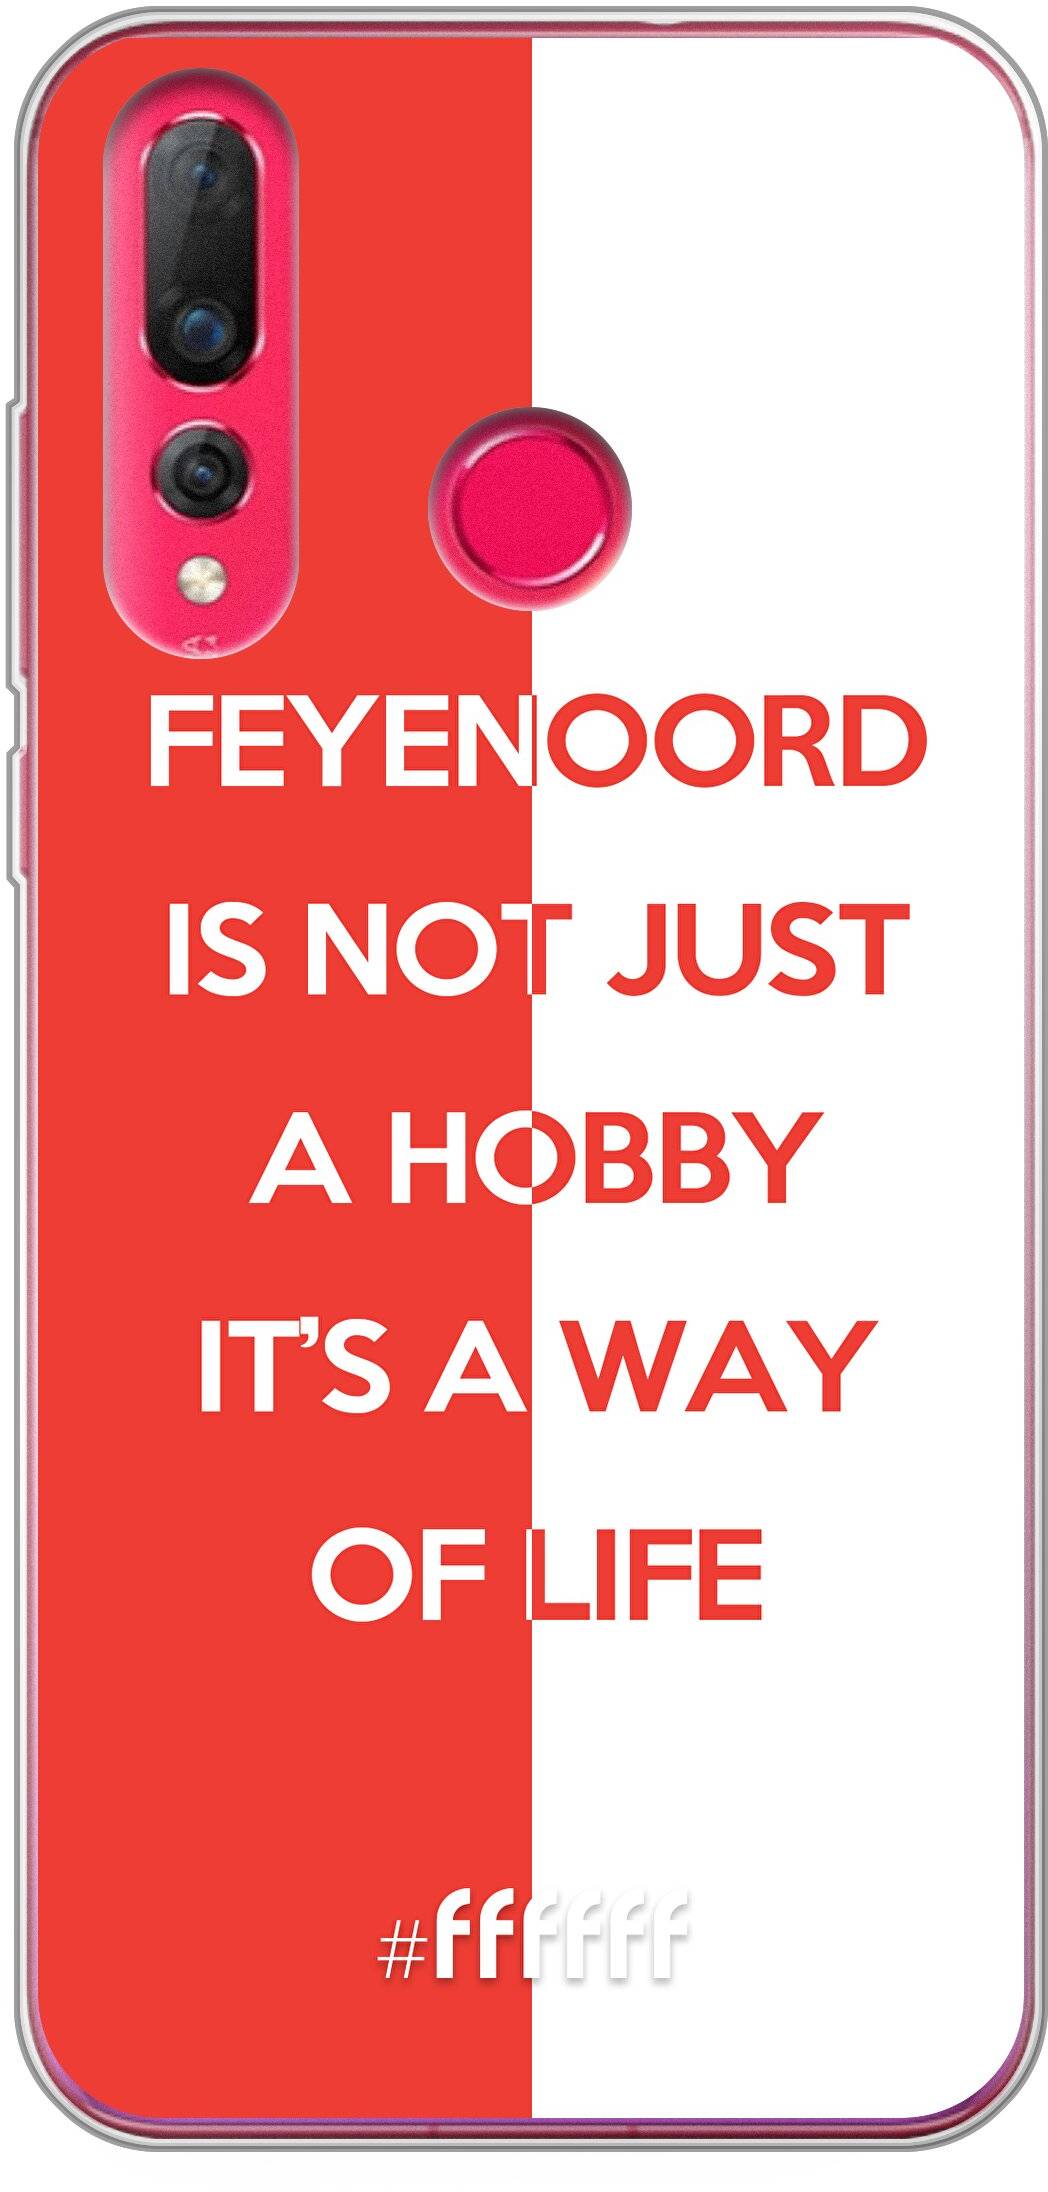 Feyenoord - Way of life P30 Lite